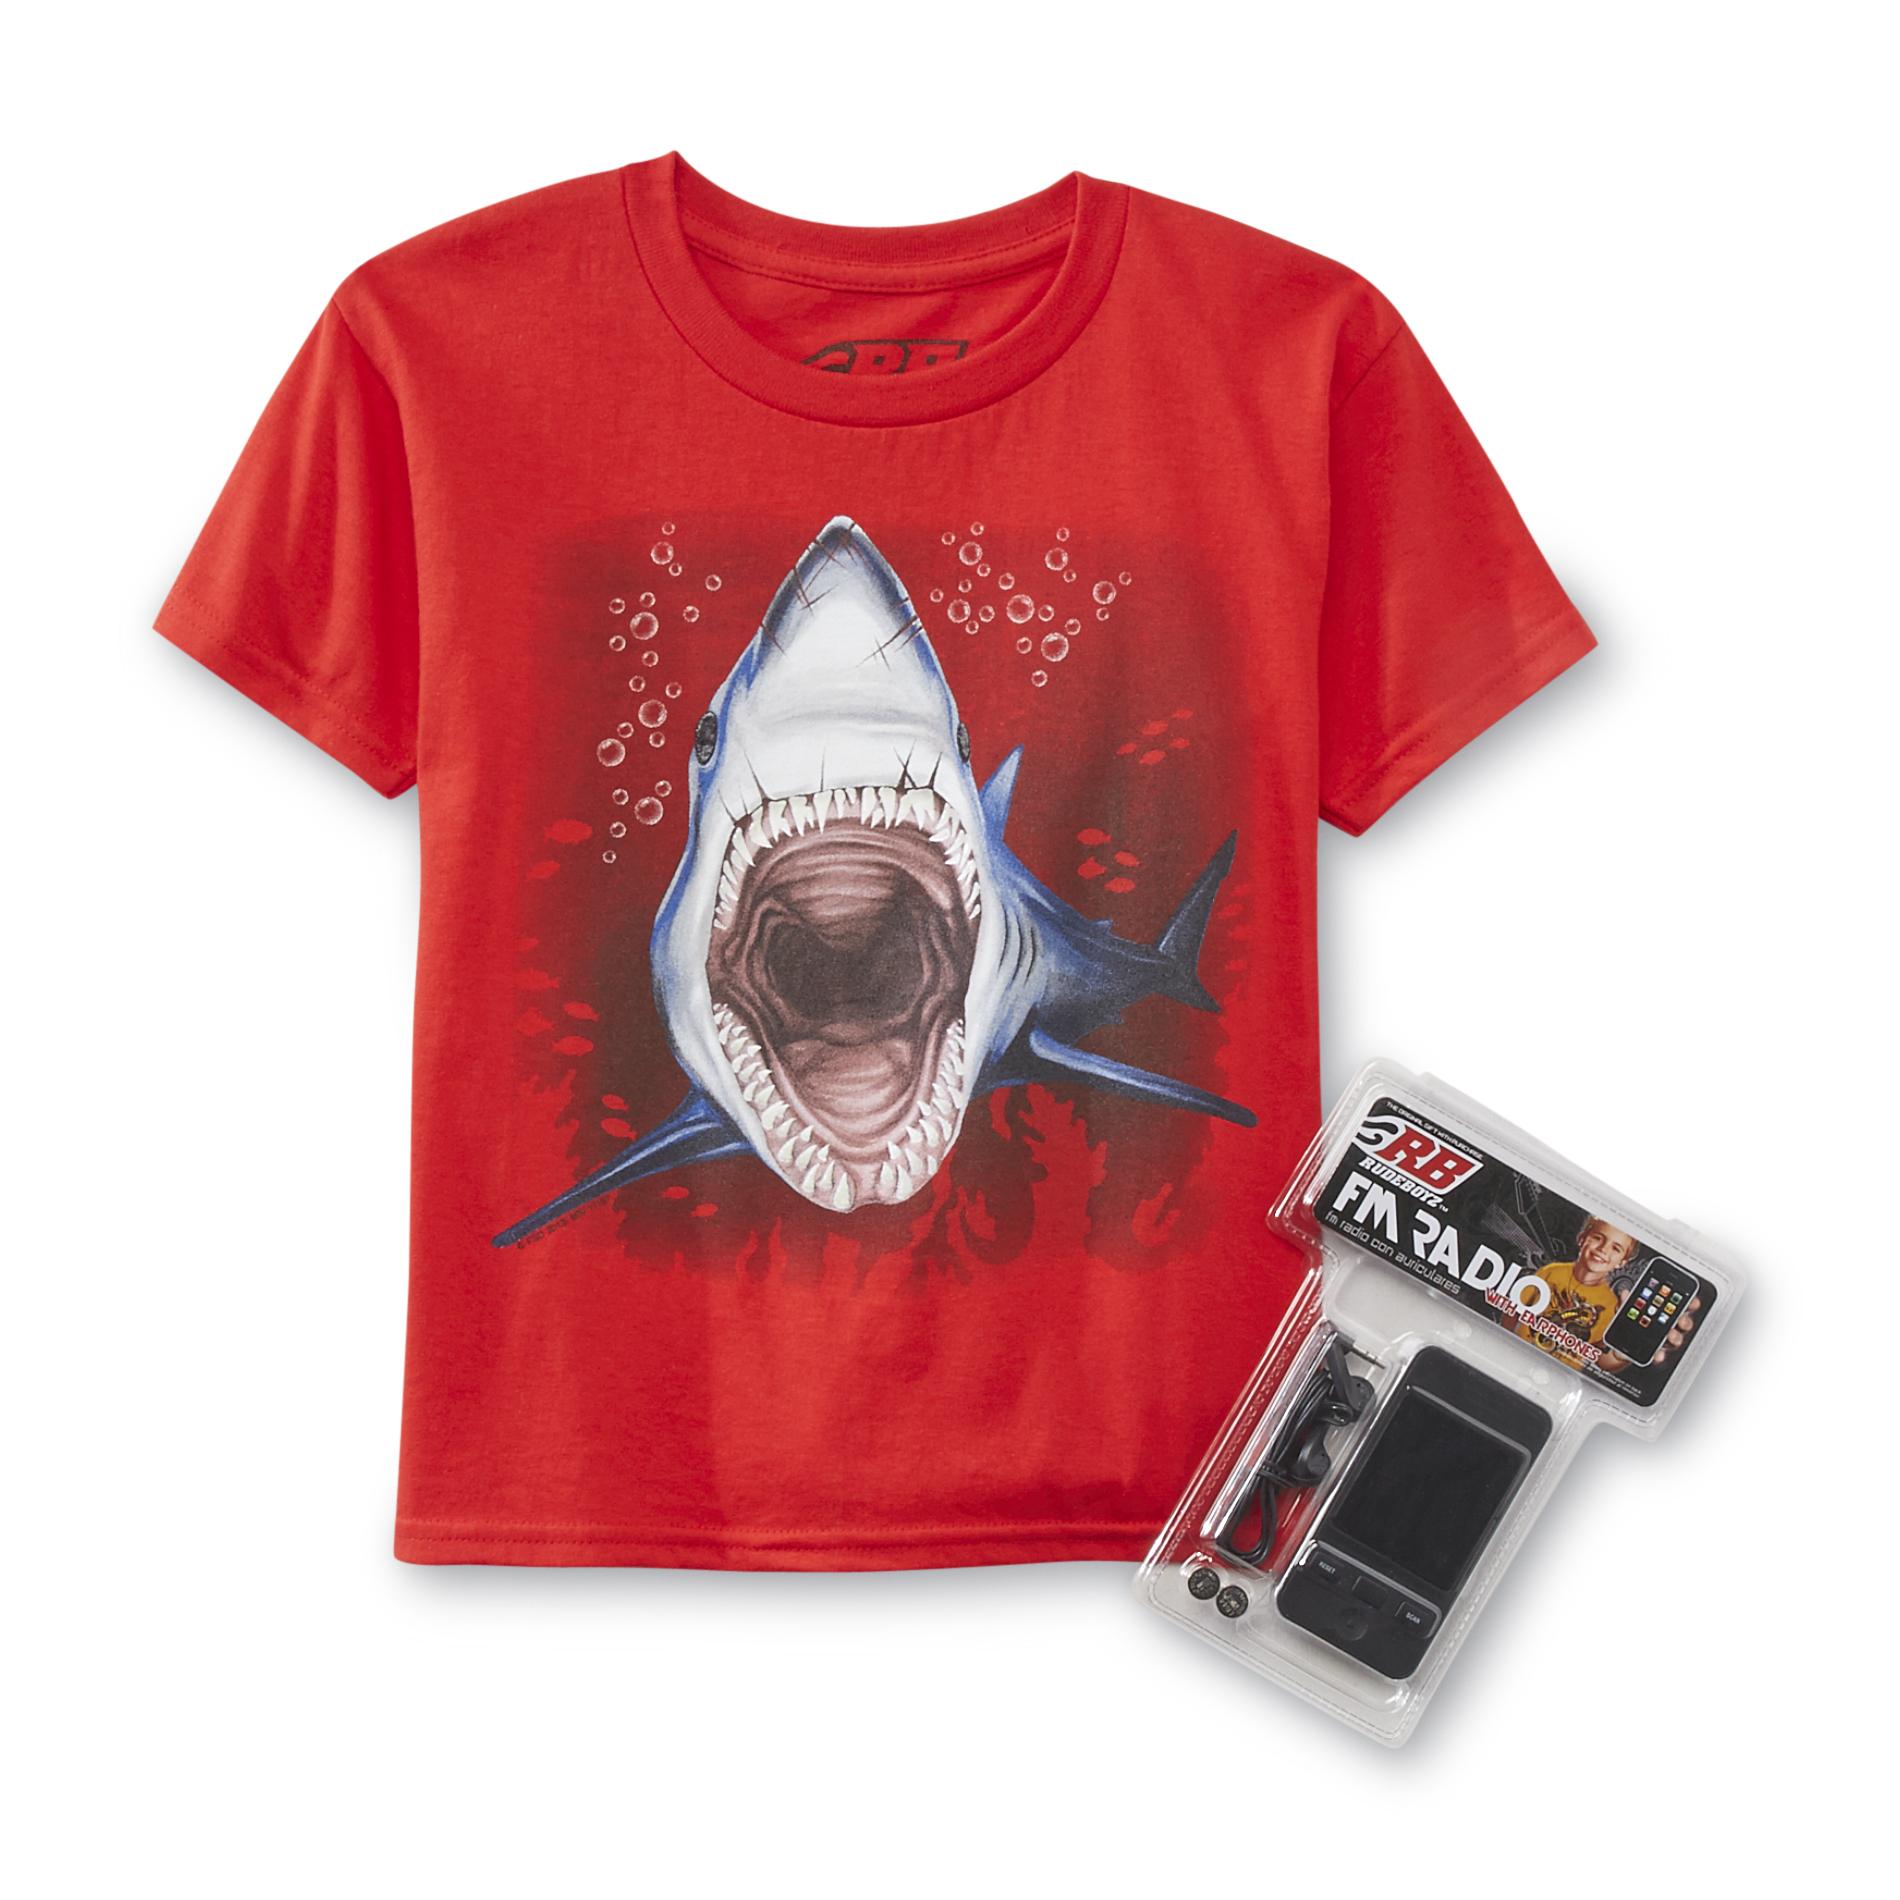 Rudeboyz Boy's Shark-Print T-Shirt & Toy - Radio